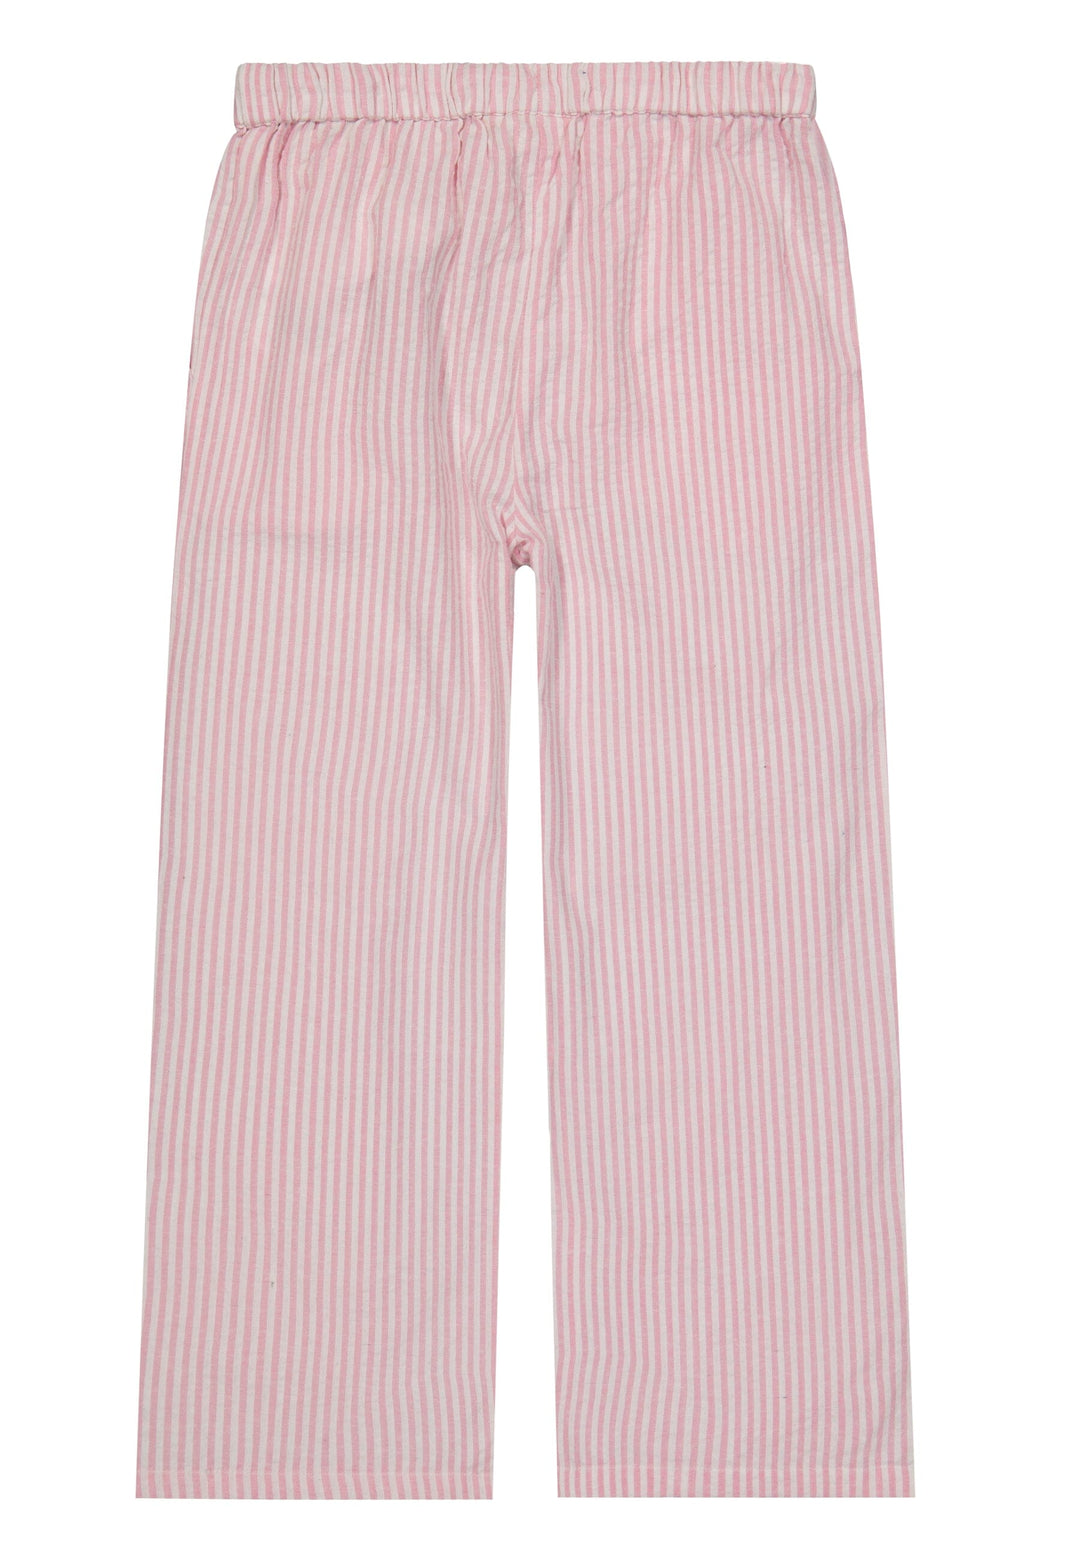 The New - Tnkix Pants - Pink Stripe Bukser 